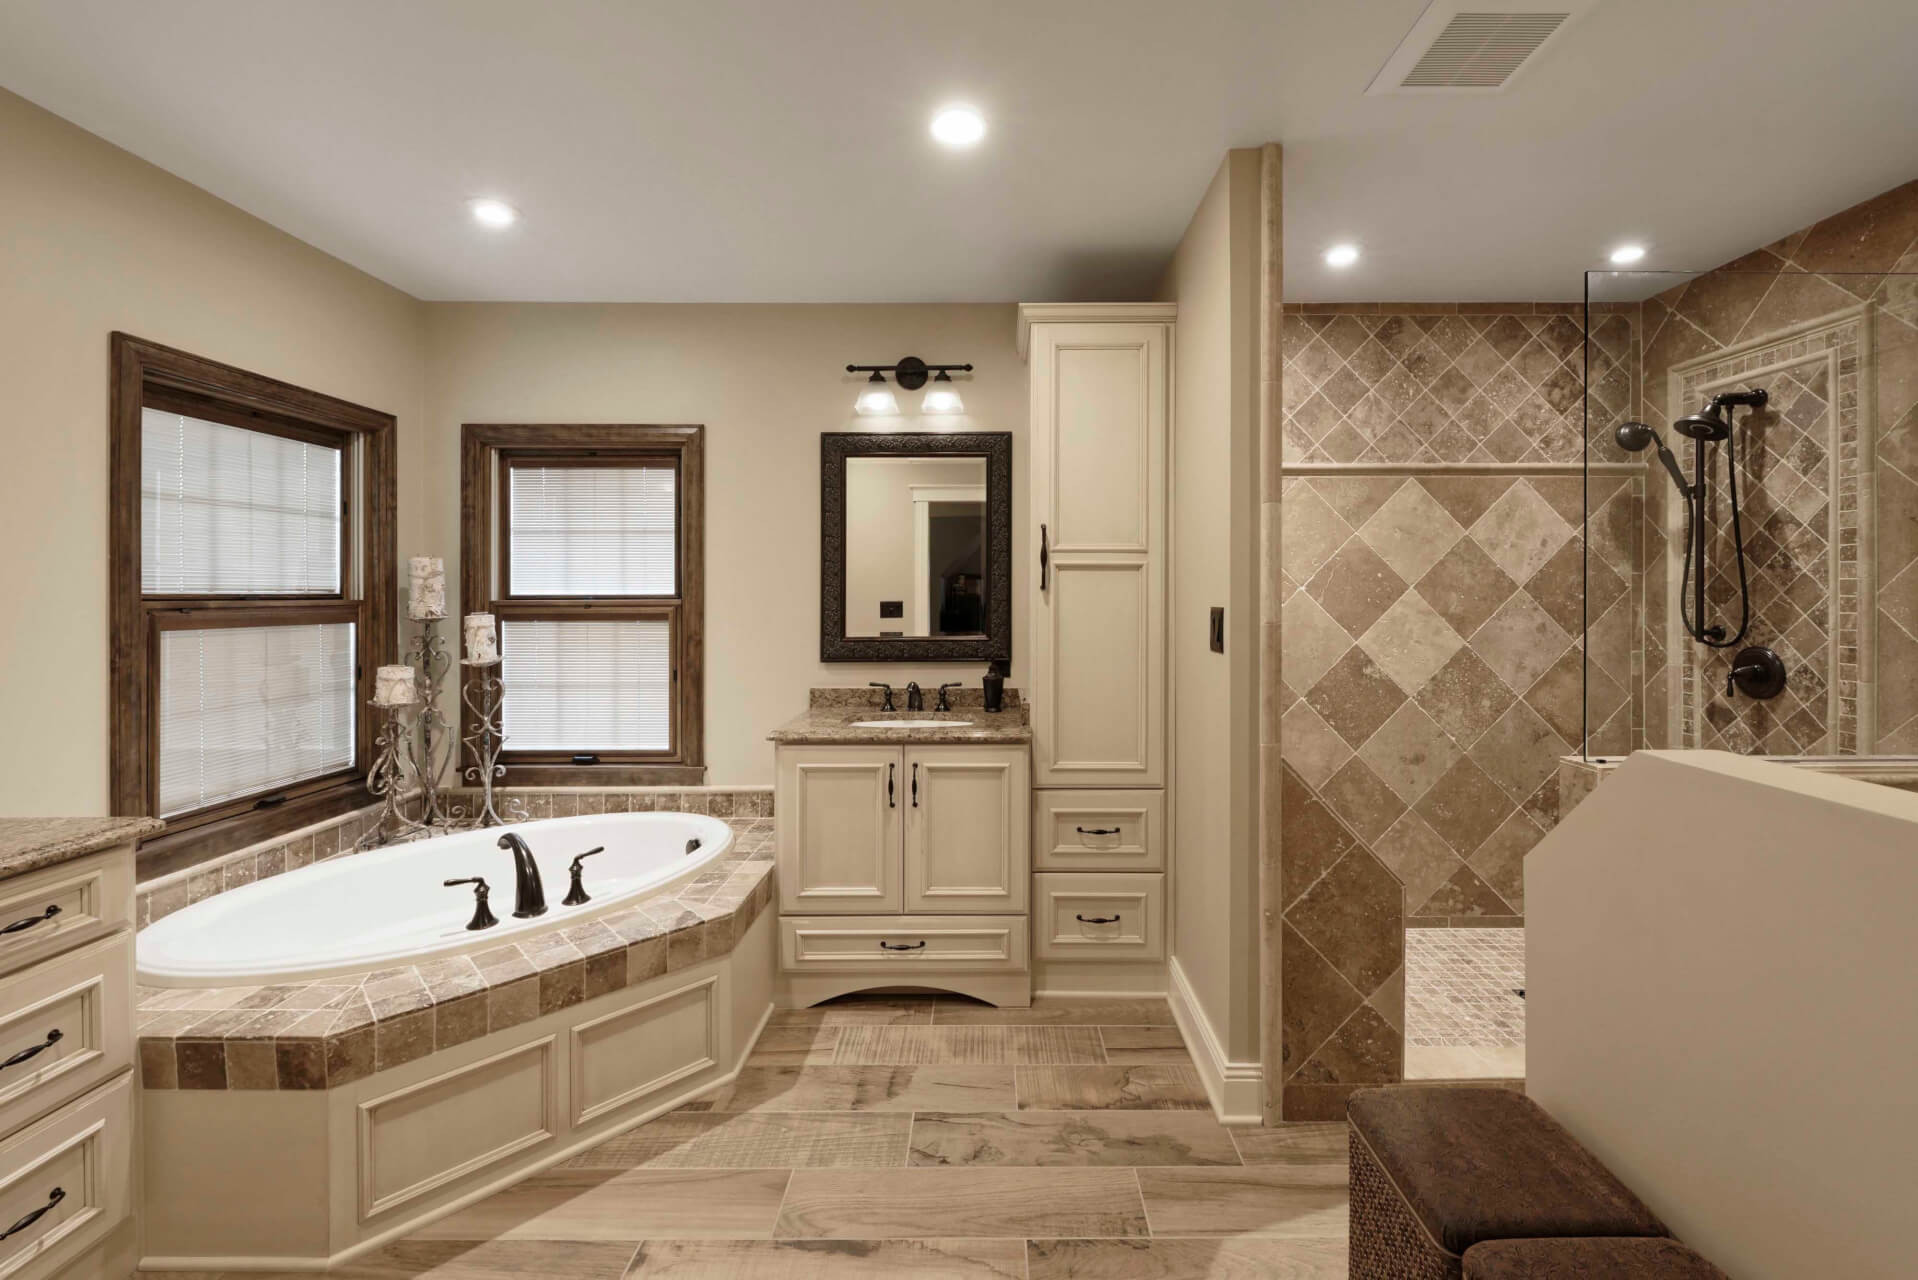 Photos Of Bathroom Remodels
 Bathroom Remodeler Remodeling in Manassas VA